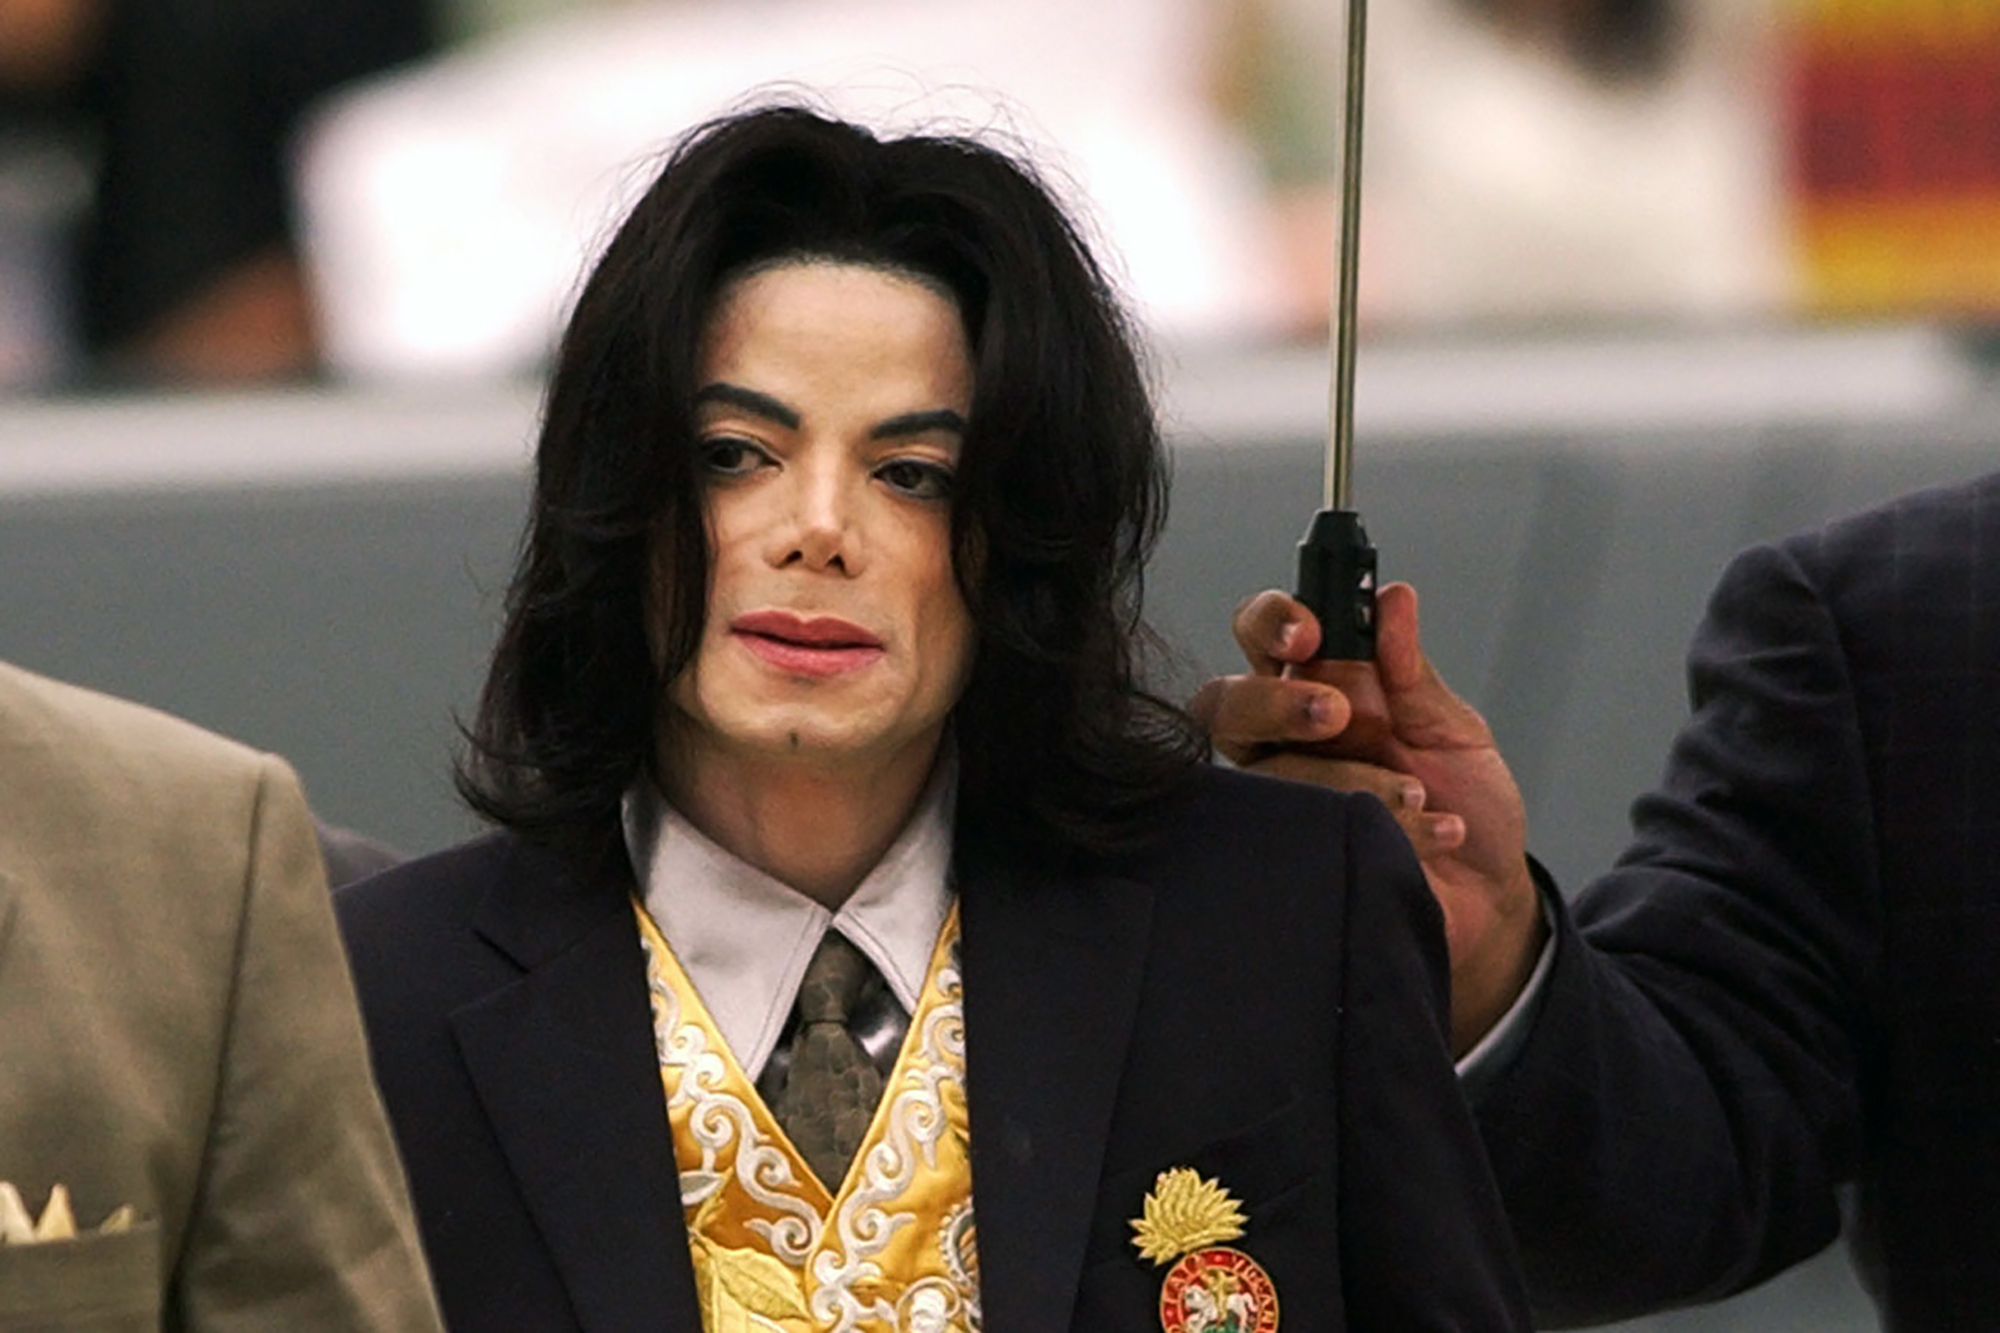 A California appeals court revives sexual abuse lawsuits against Michael Jackson